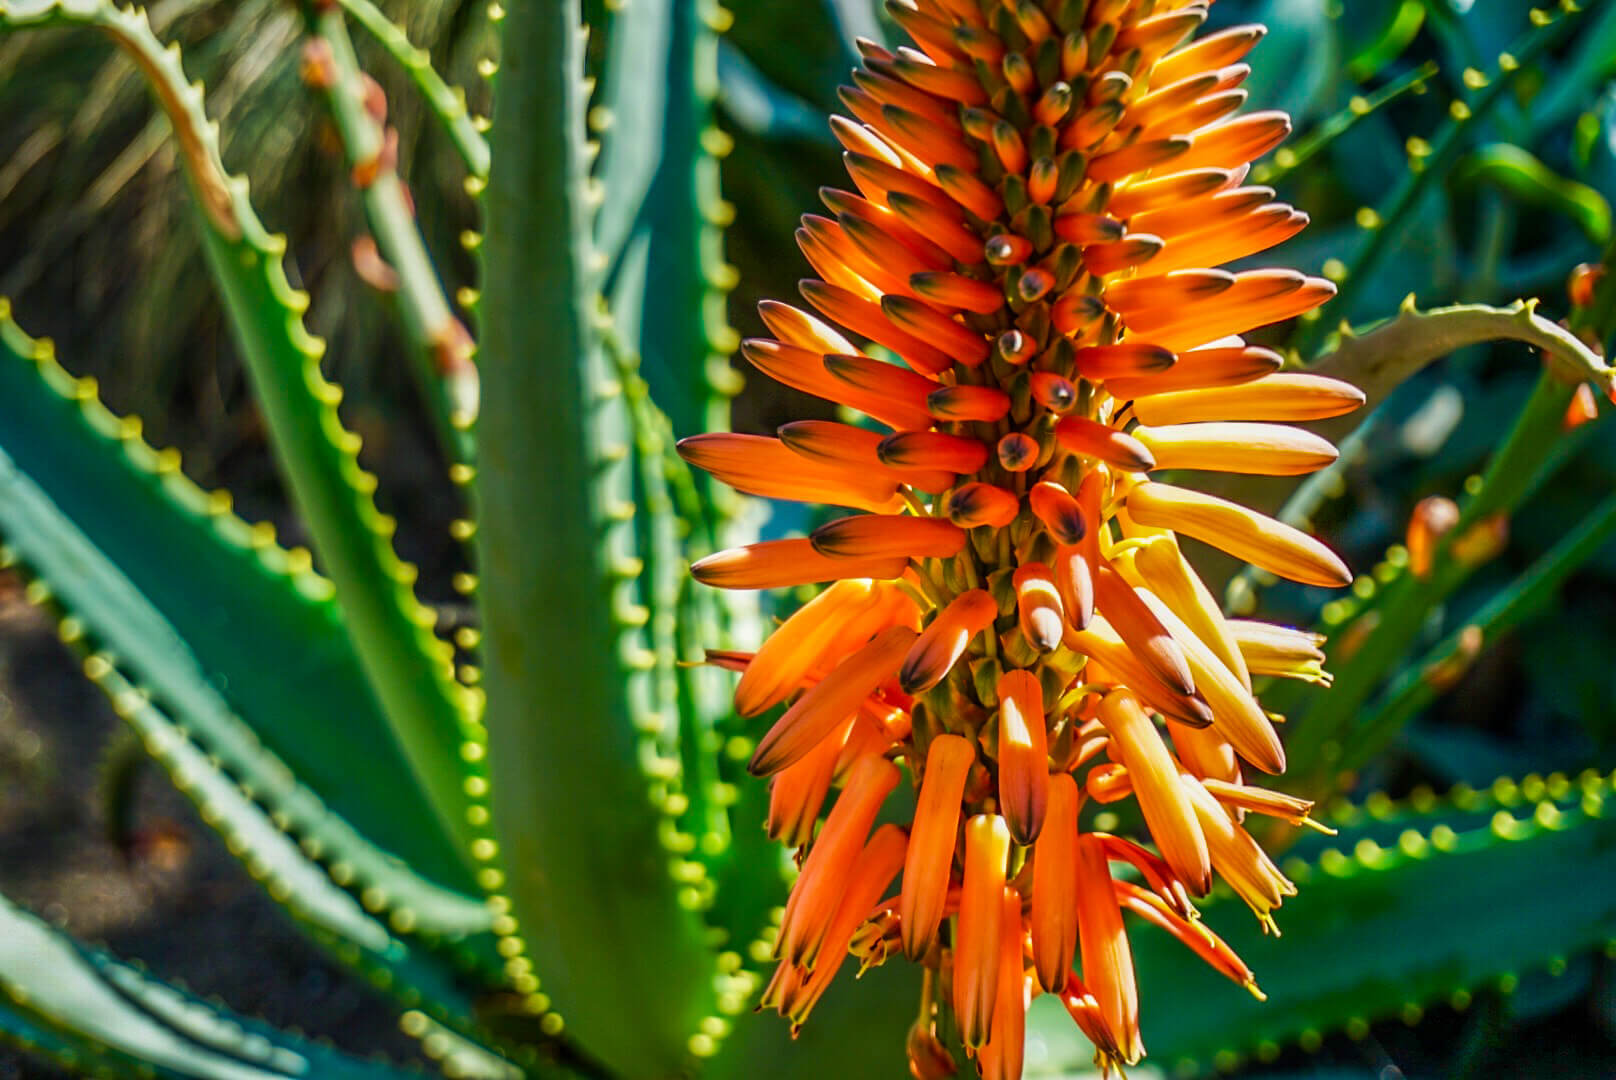 close up picture of orange flower